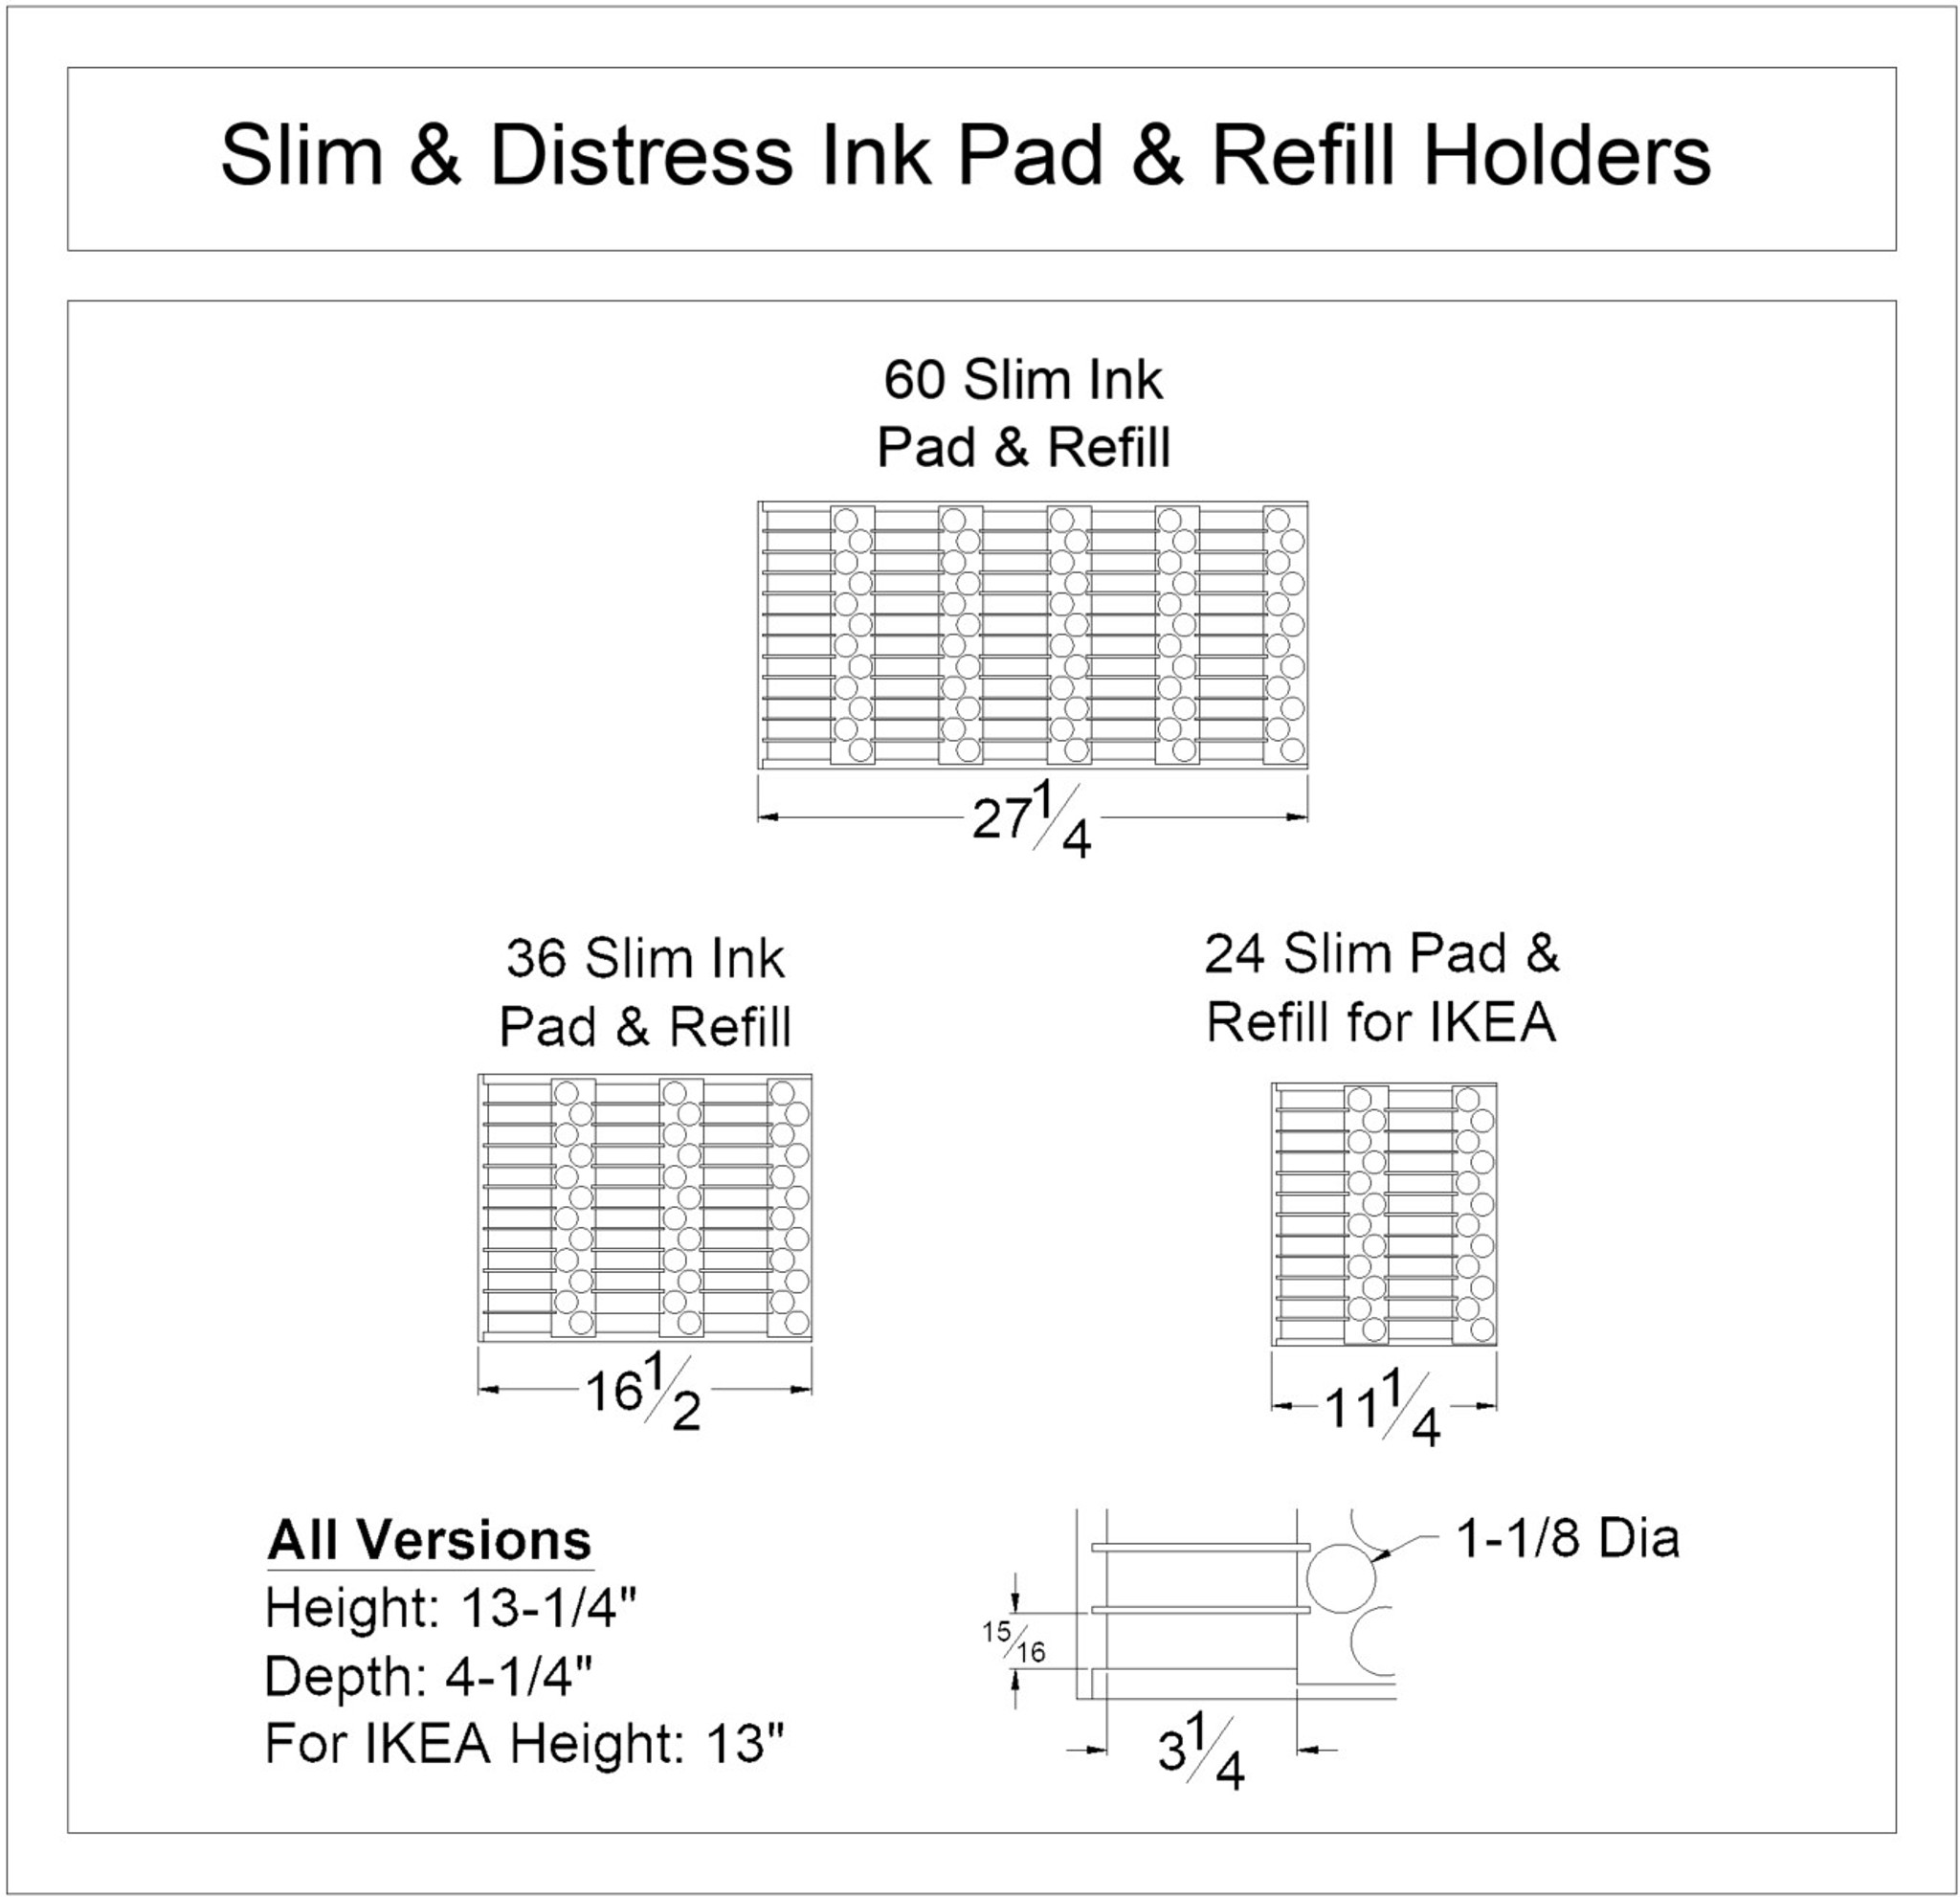 Slim & Distress Ink Pad & Refill Holder